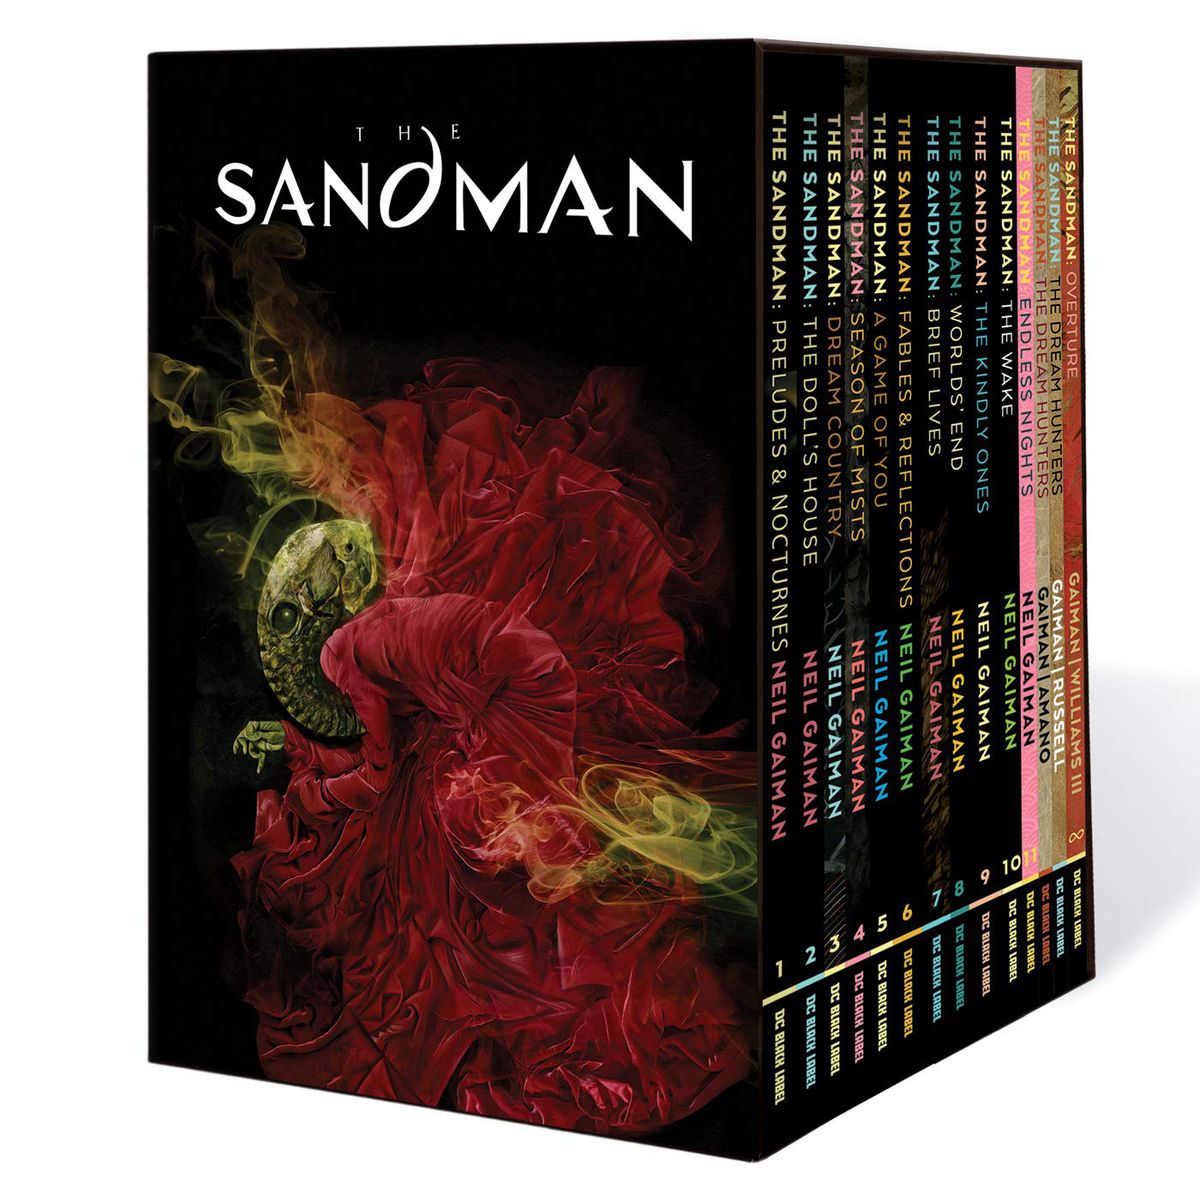 A product shot of the Sandman box set